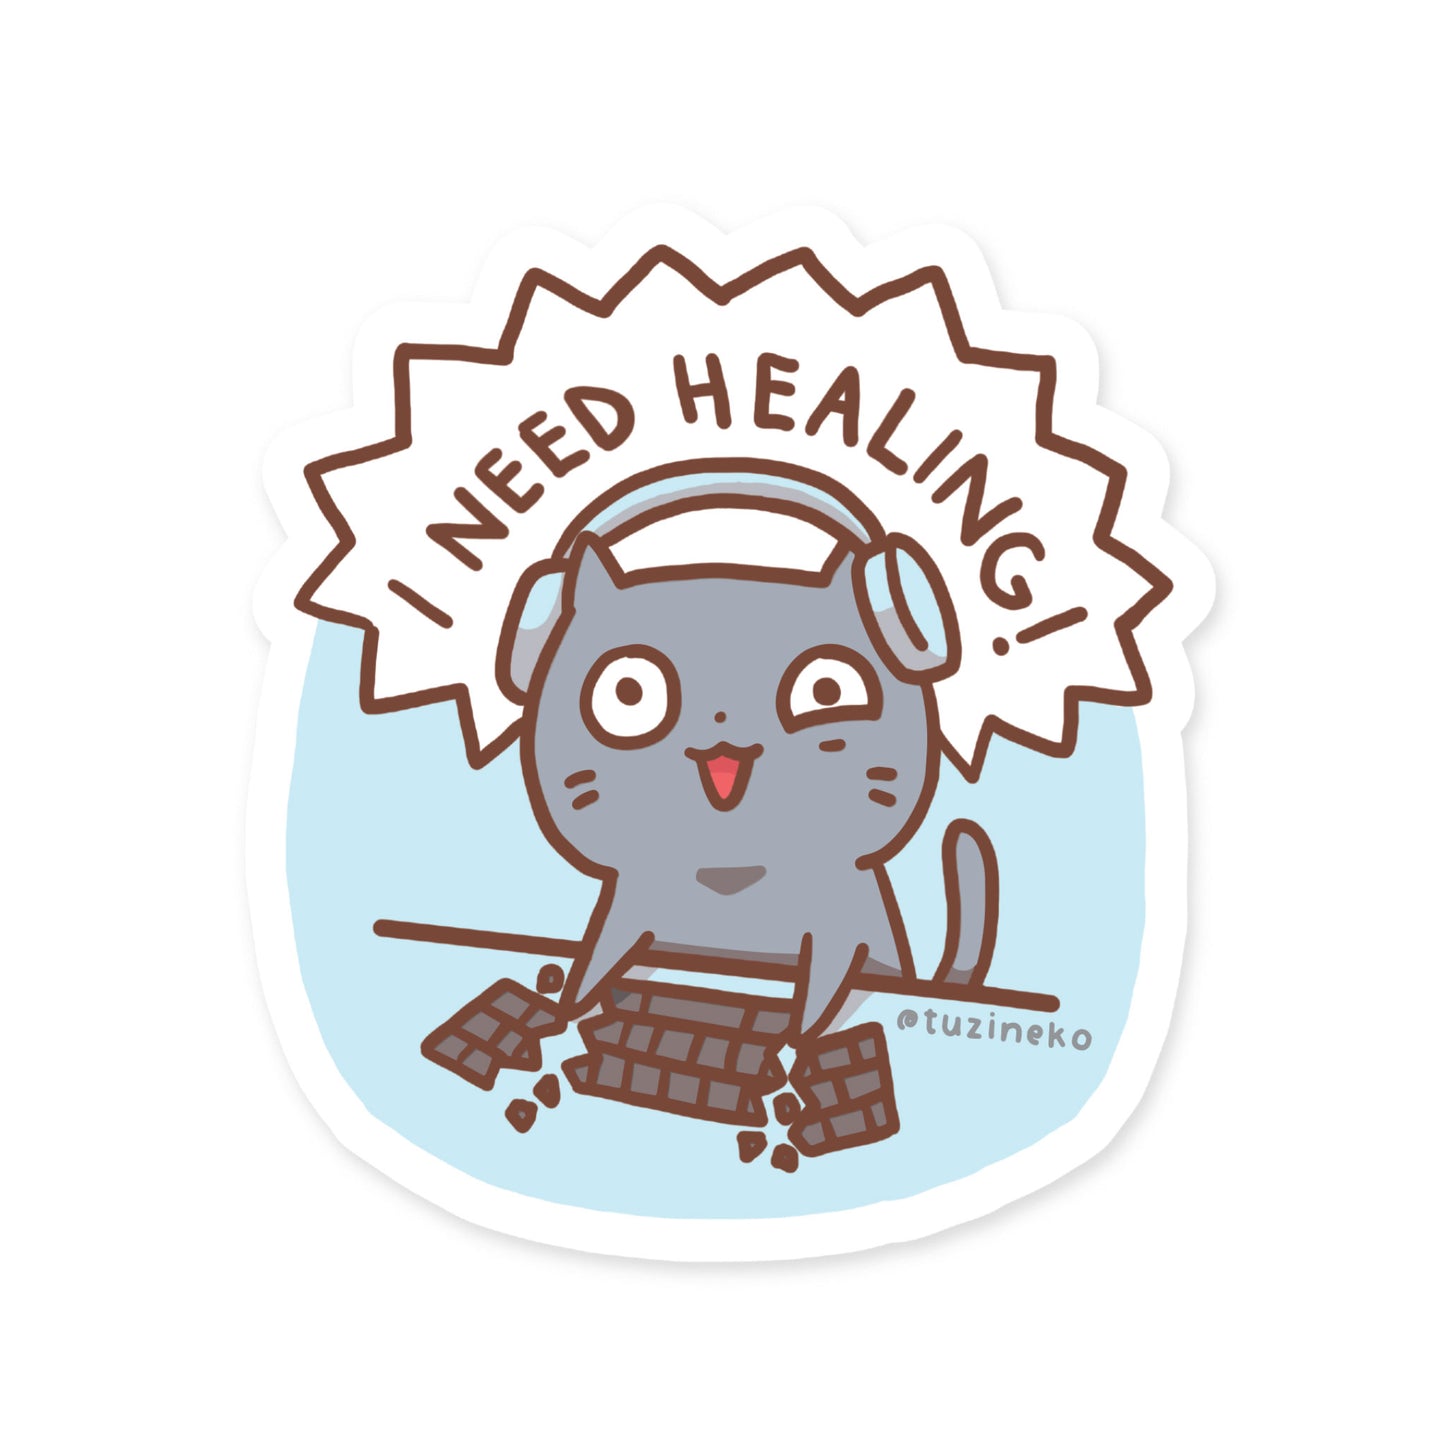 Gaming Neko "I Need Healing!" Matte Waterproof Sticker with Gloss Spot UV